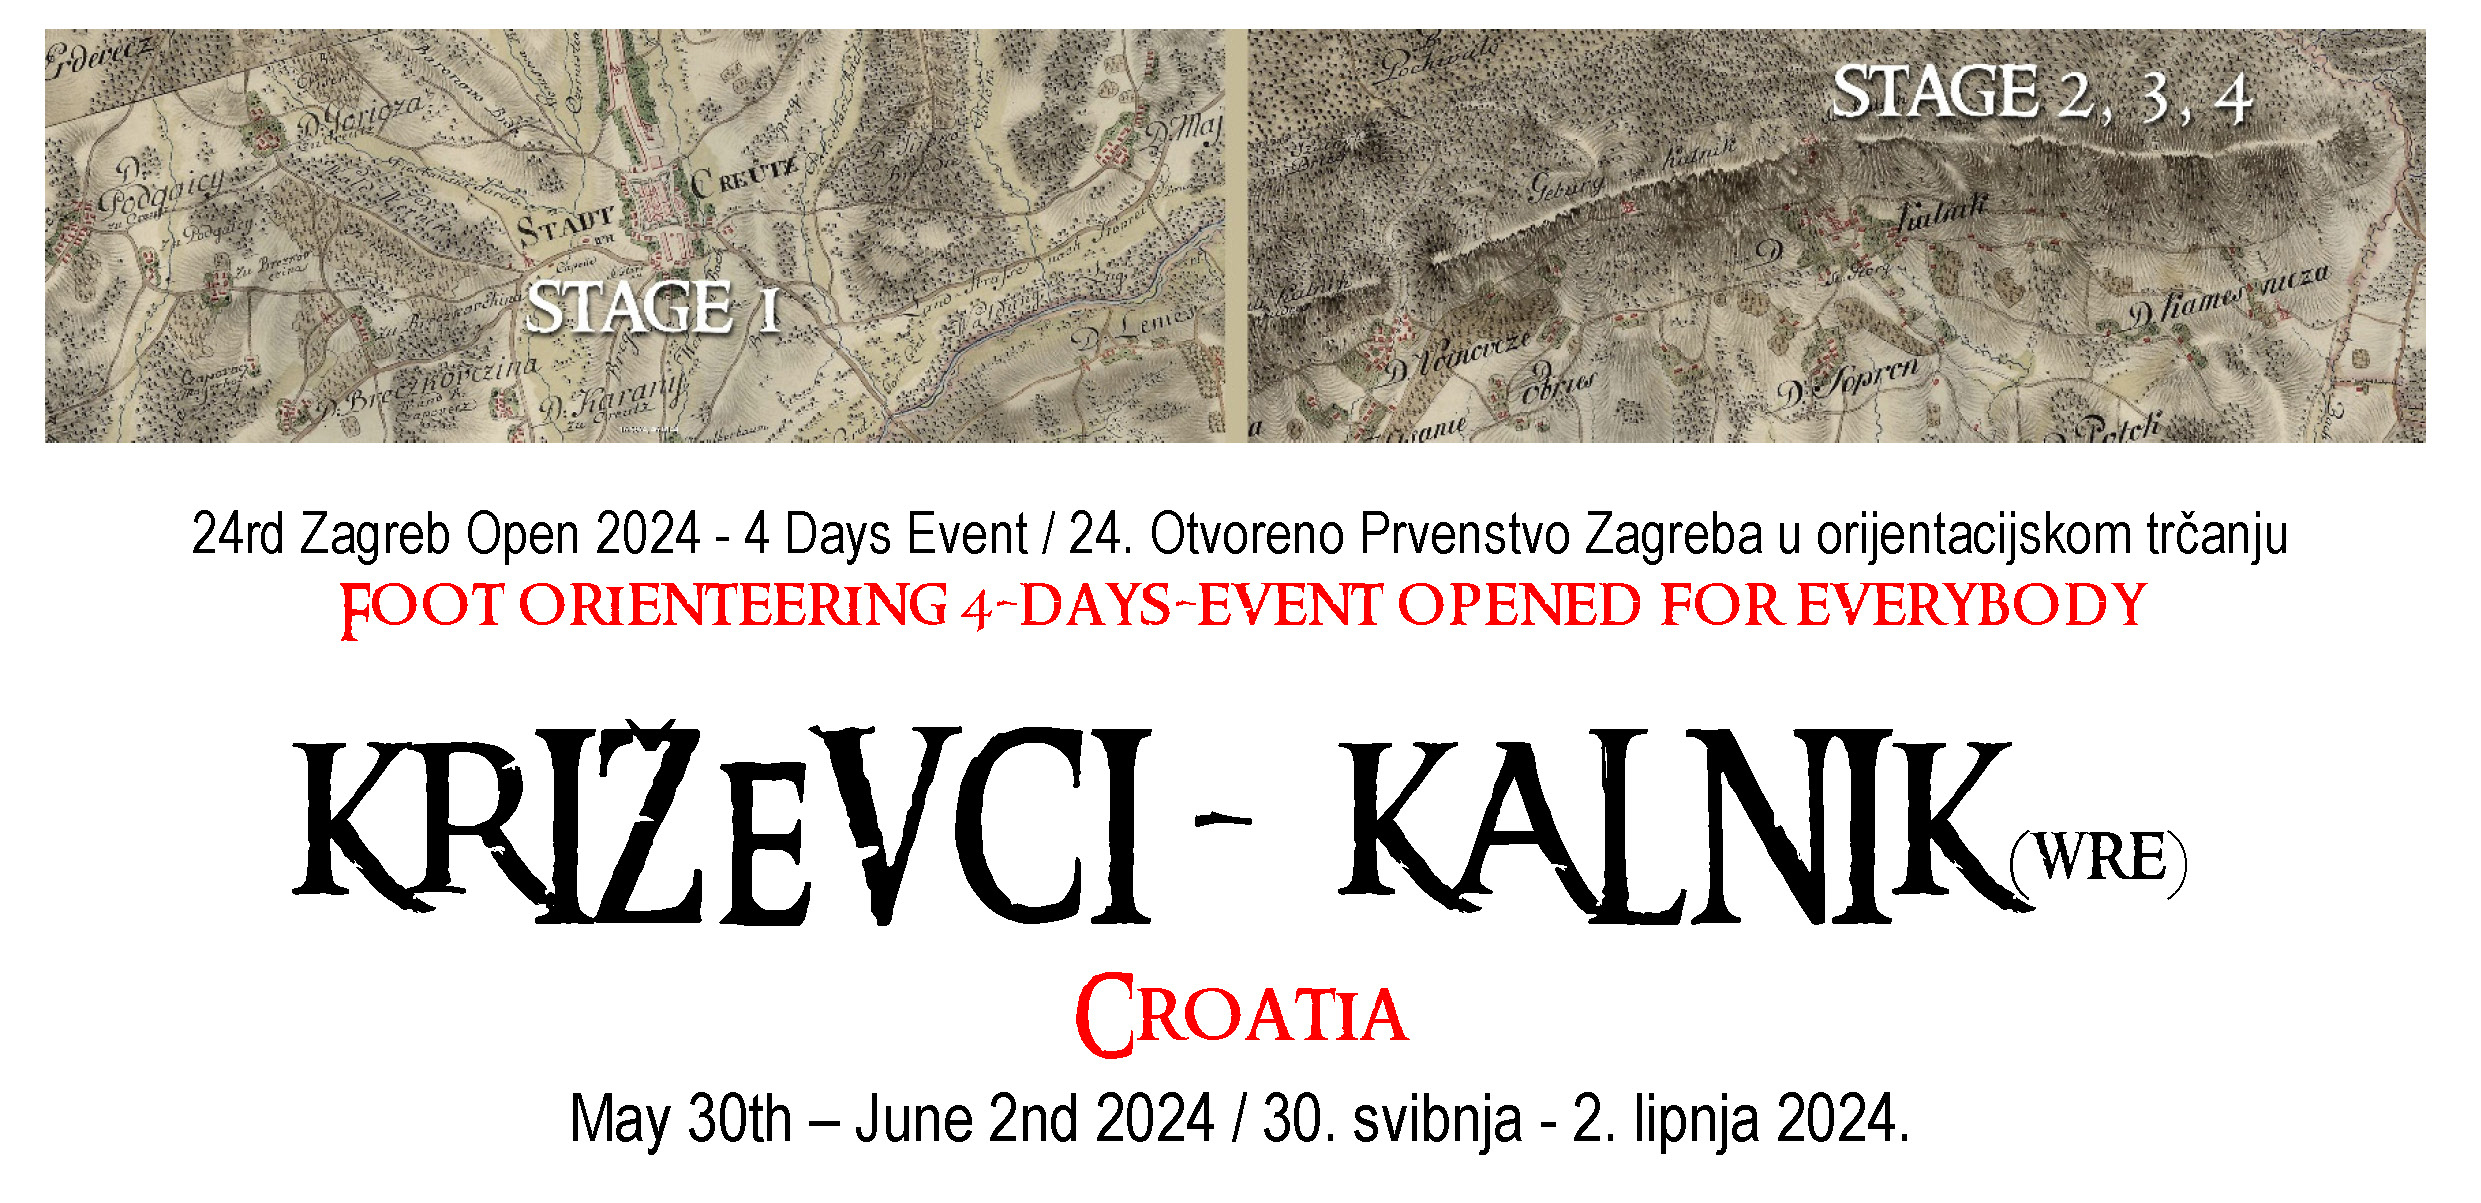 "Zagreb Open 2024" Four days of orienteering on beautiful mountain